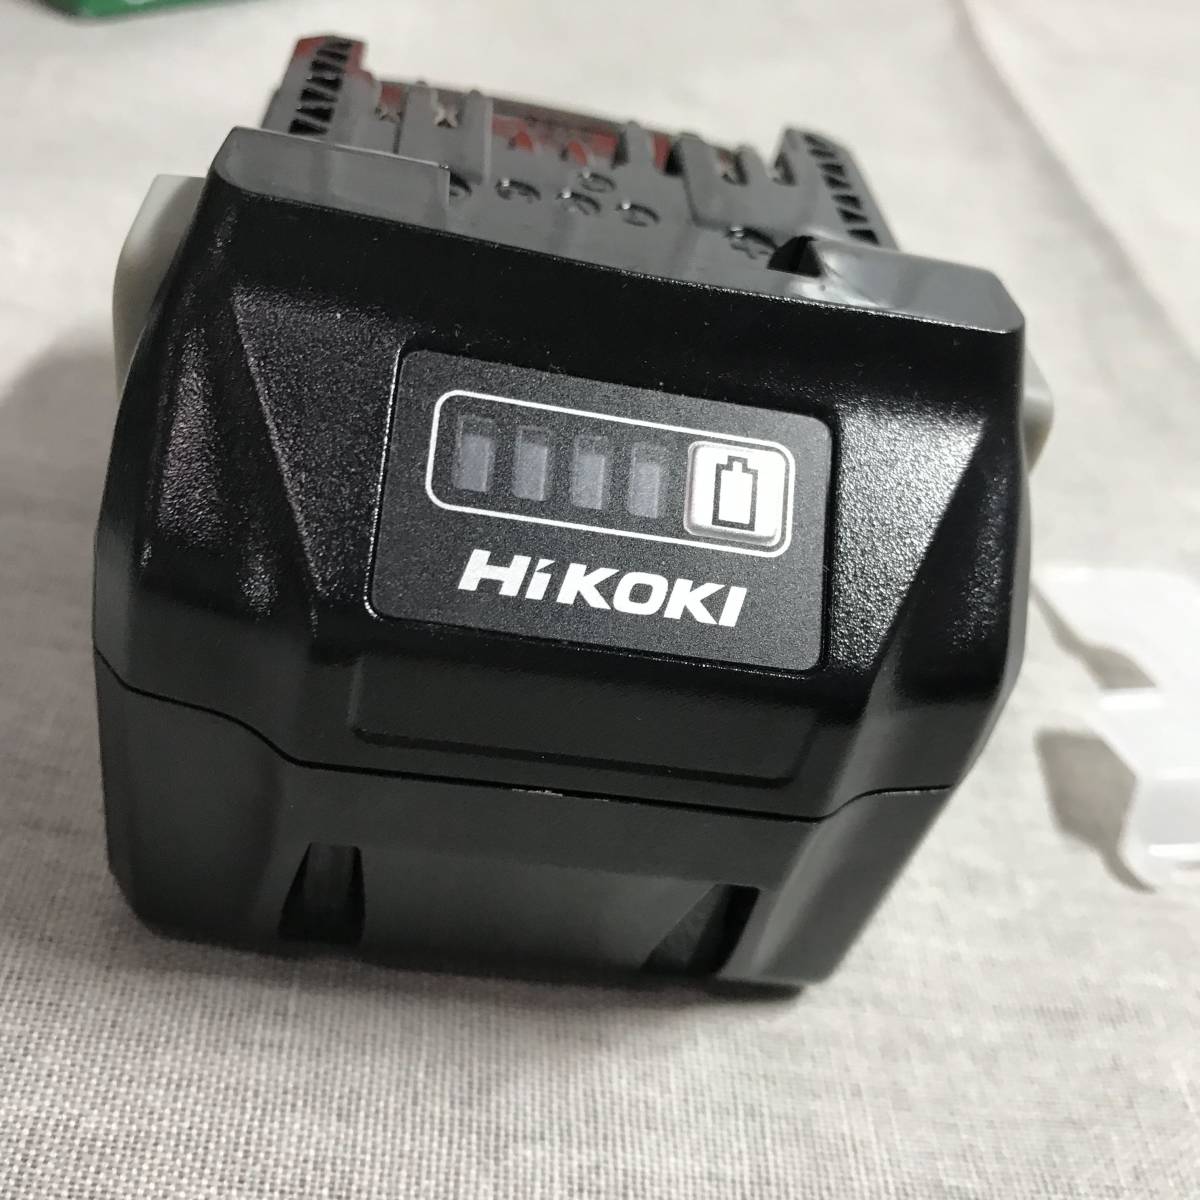 HiKOKI(ハイコーキ) 旧日立工機 リチウムイオン電池 2.5Ah BSL36A18